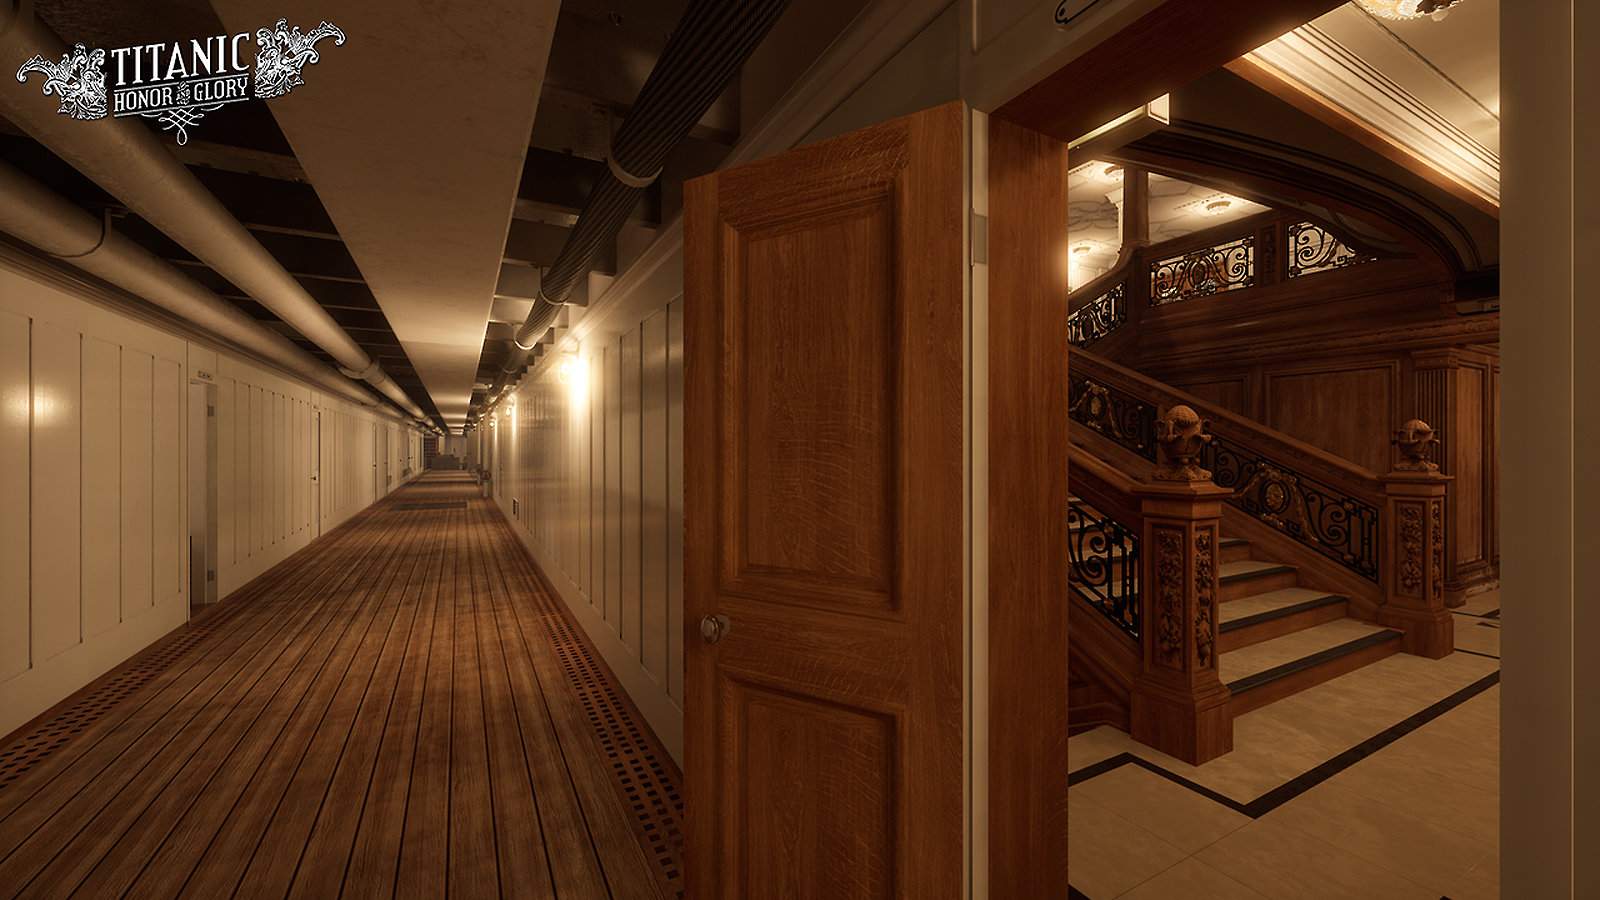 What the corridors looked like | Encyclopedia Titanica